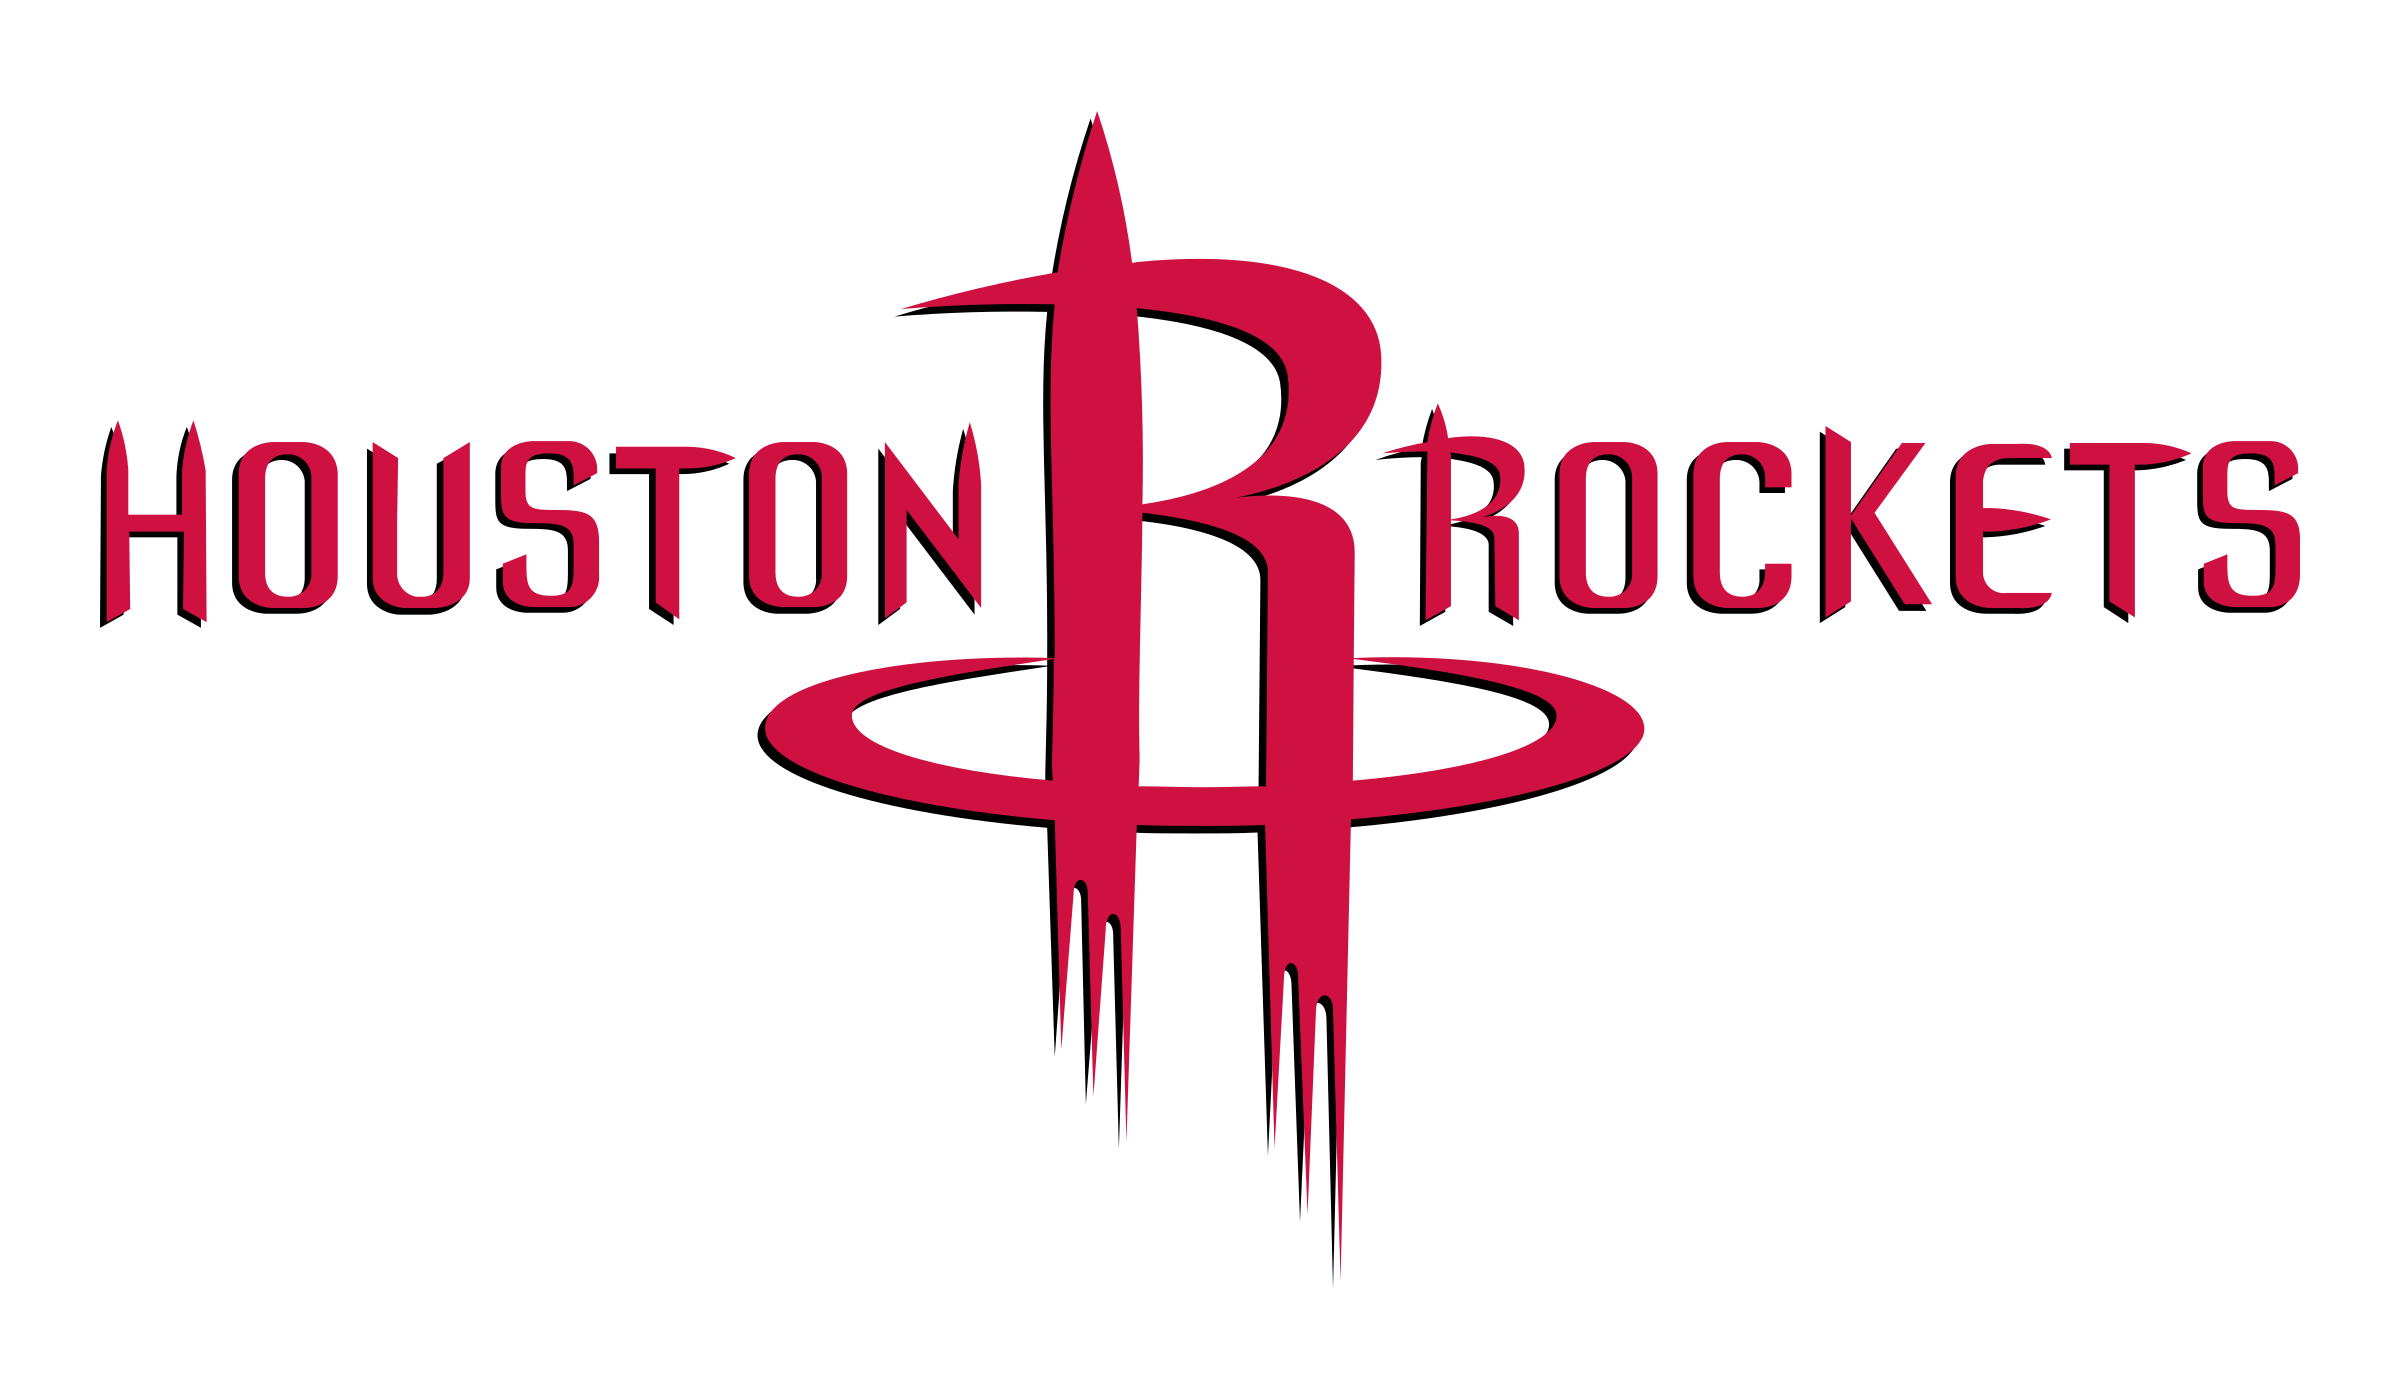 Houston rockets logo png. Clipart rocket vector